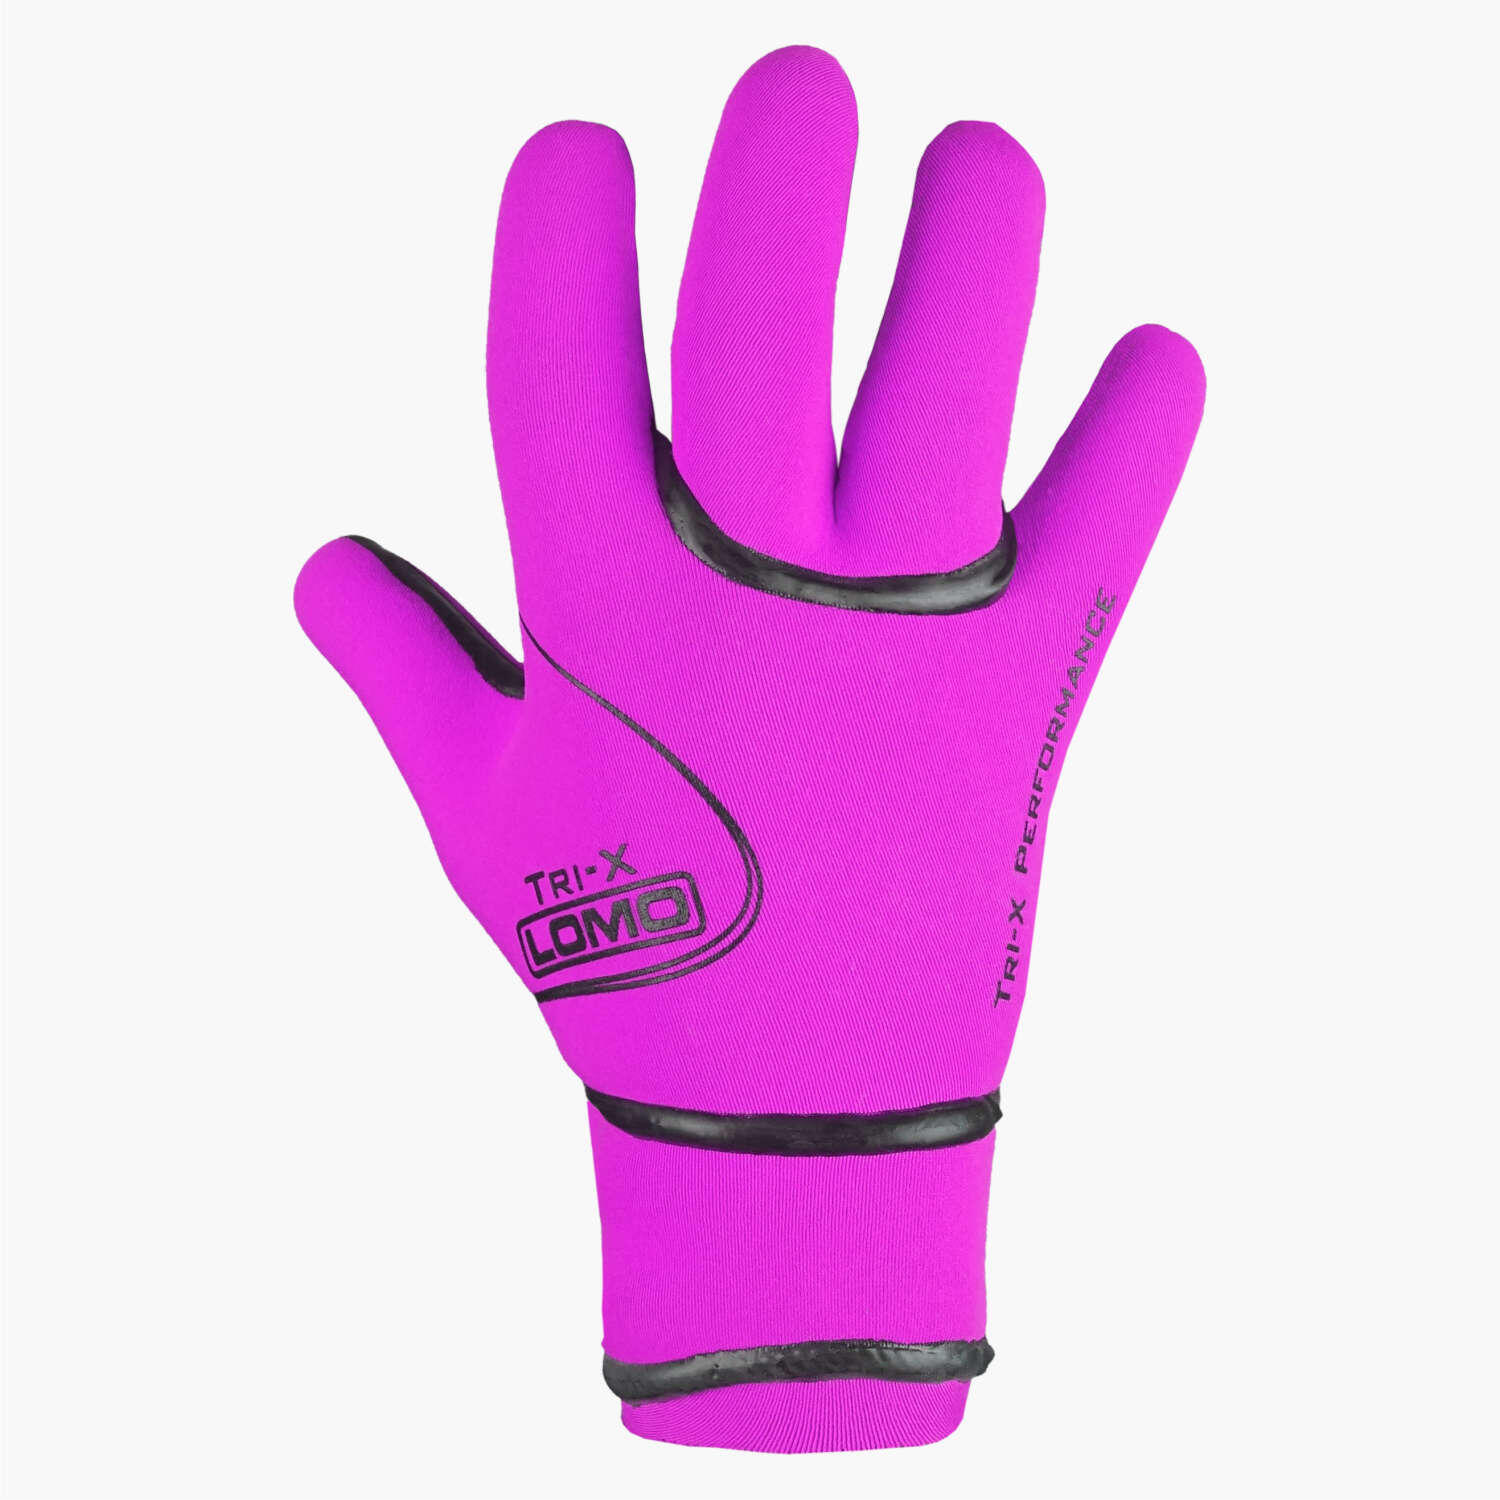 Lomo Swimming and Triathlon Gloves - Pink 2/7